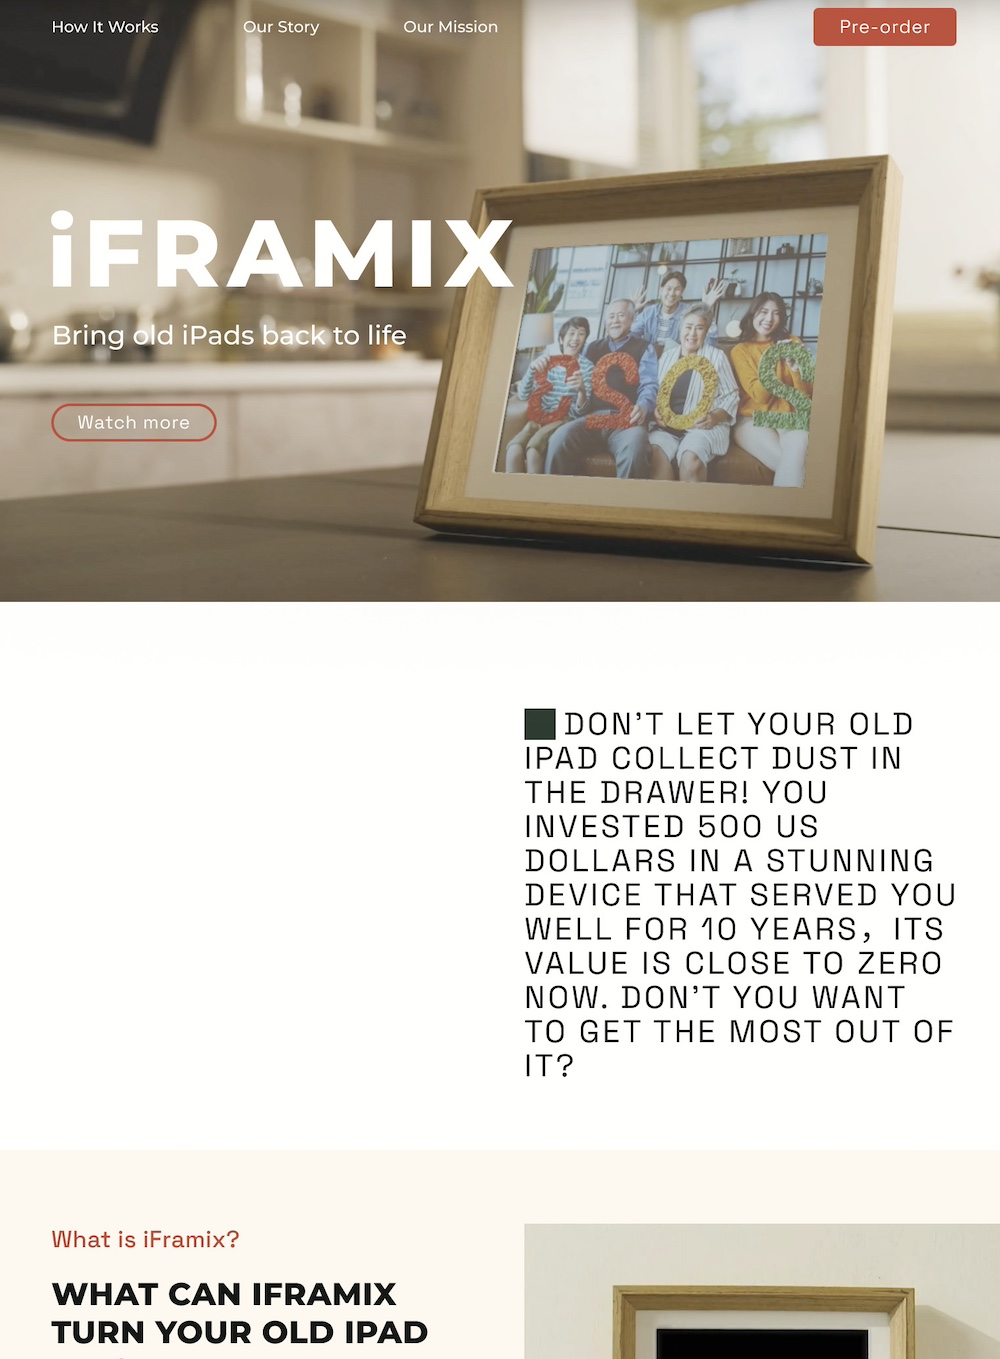 макет лендинга iFramix